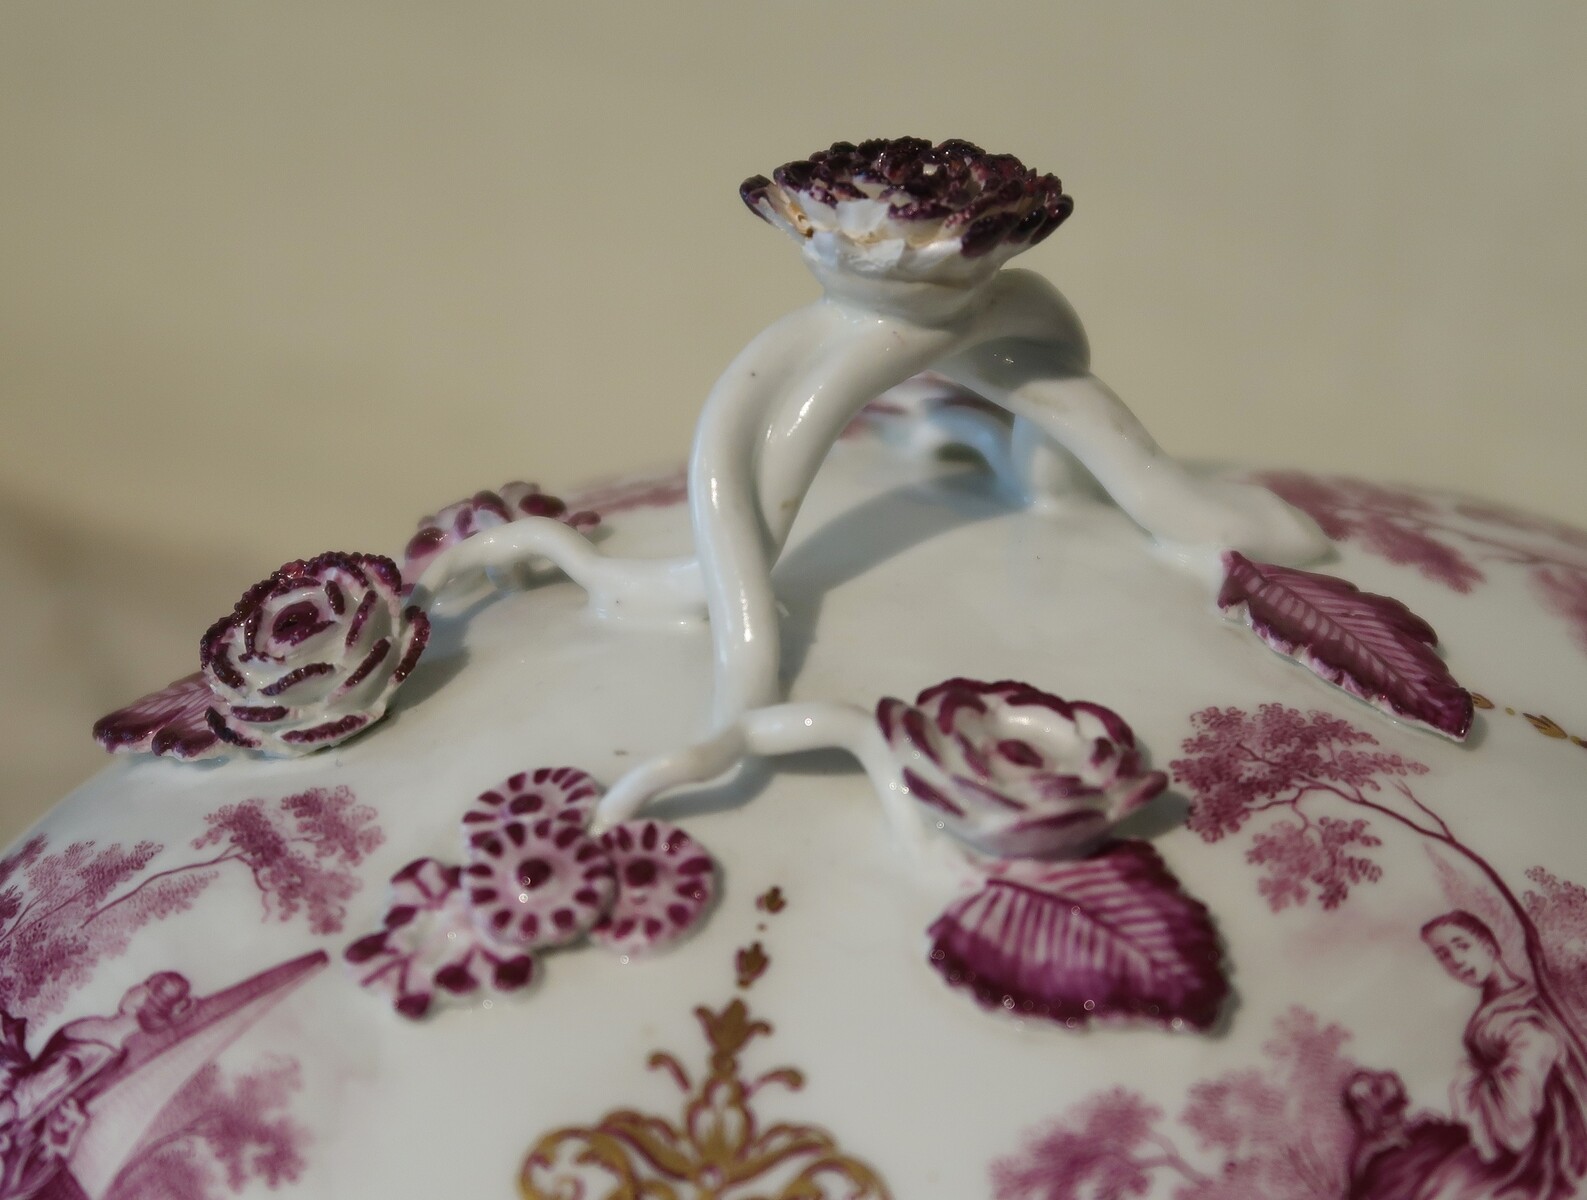 18th century Meisen Porcelain